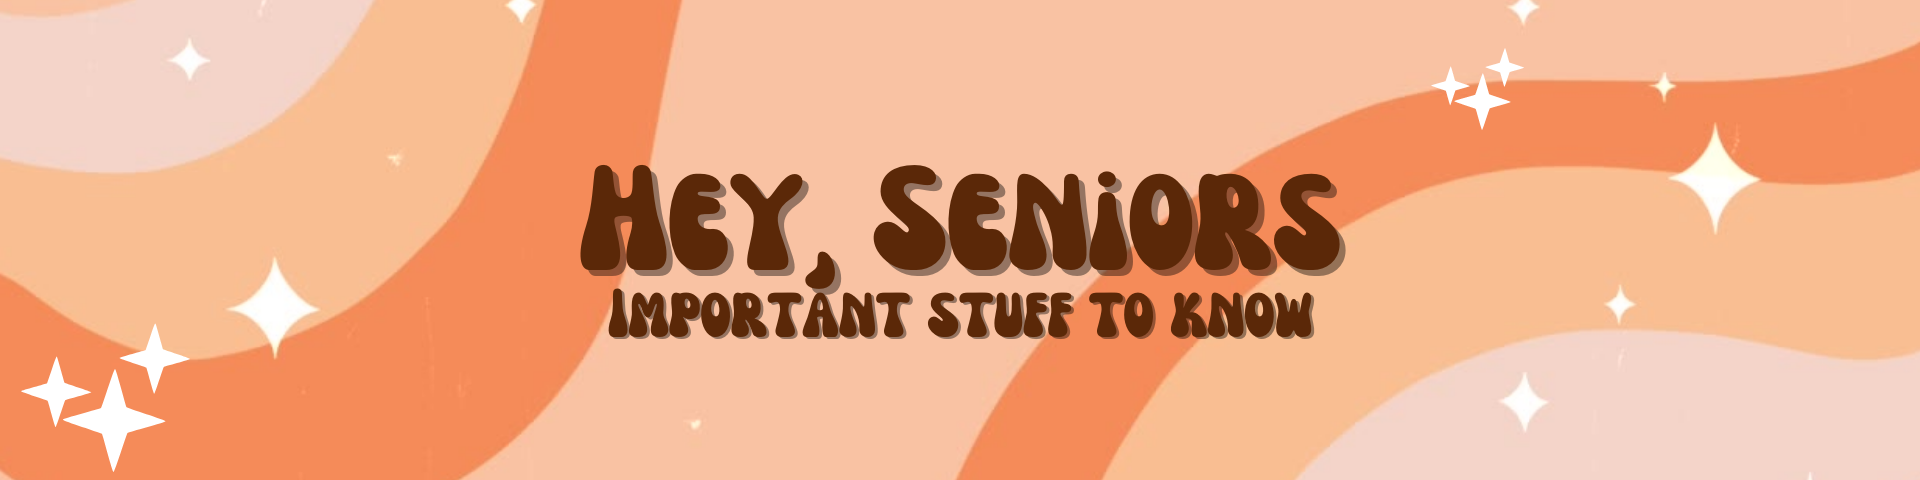 Hey Seniors Banner